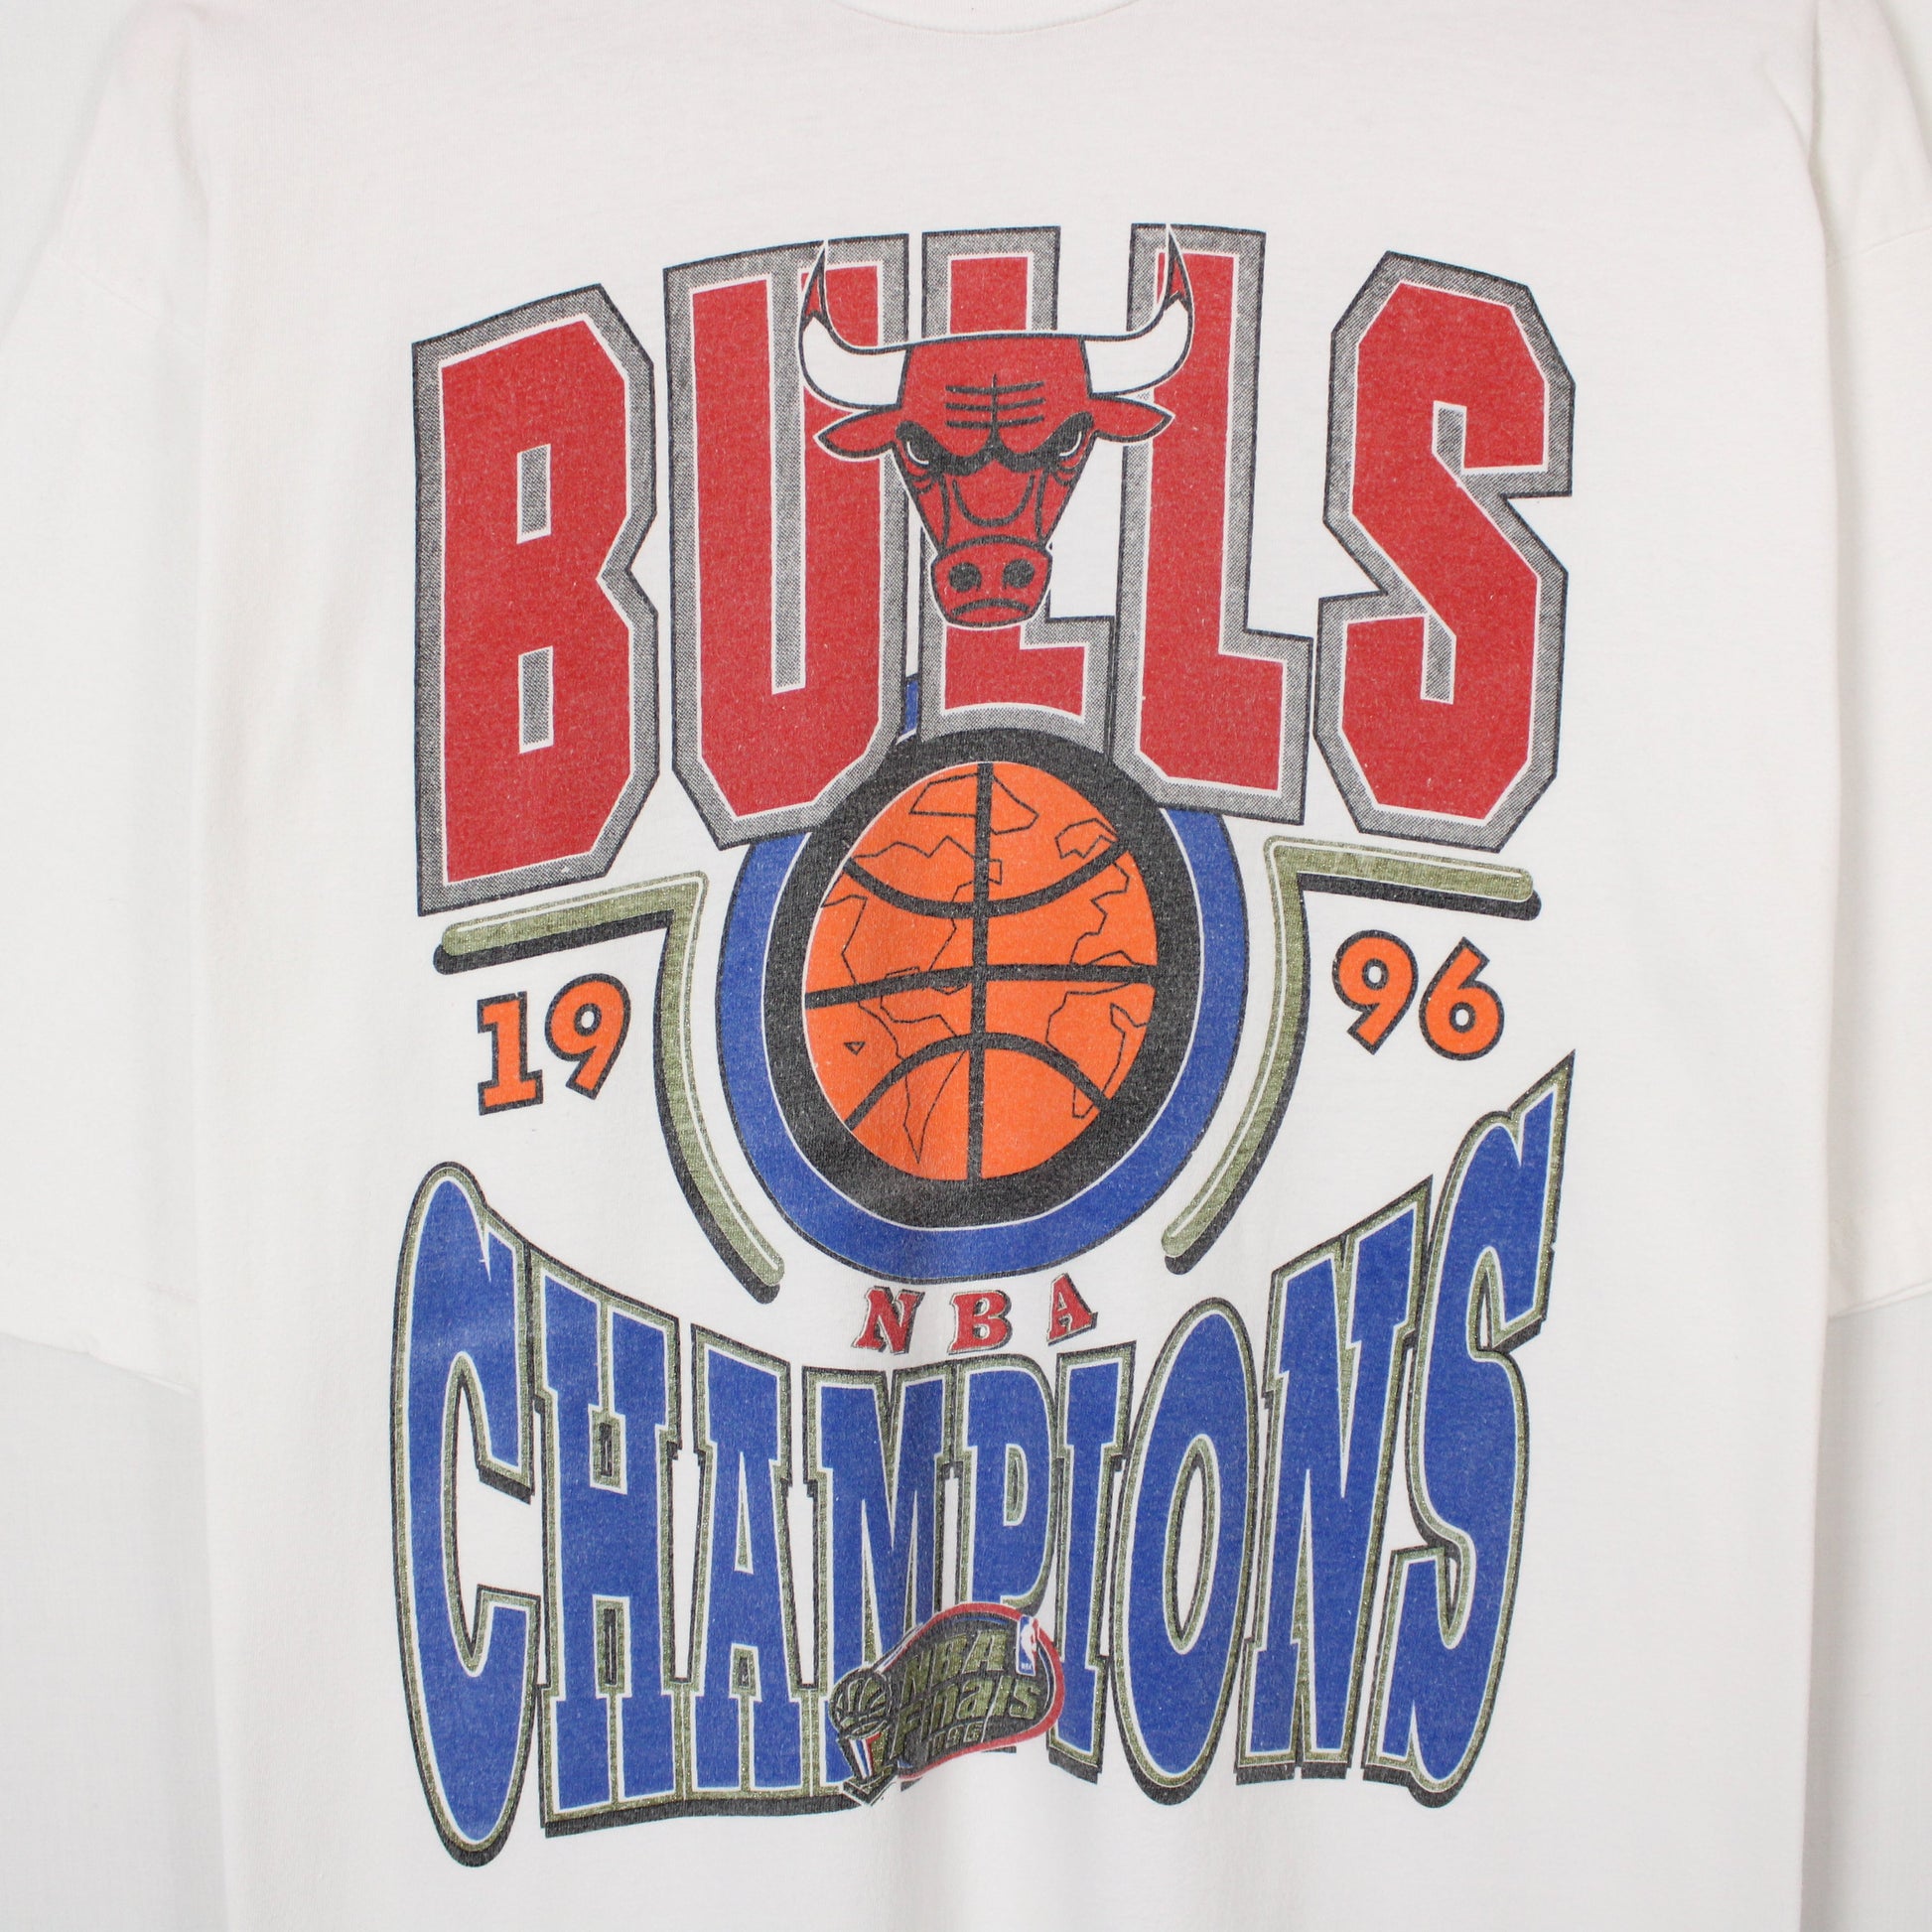 Vintage Chicago Bulls 1996 Champions Shirt, NBA Basketball Graphic